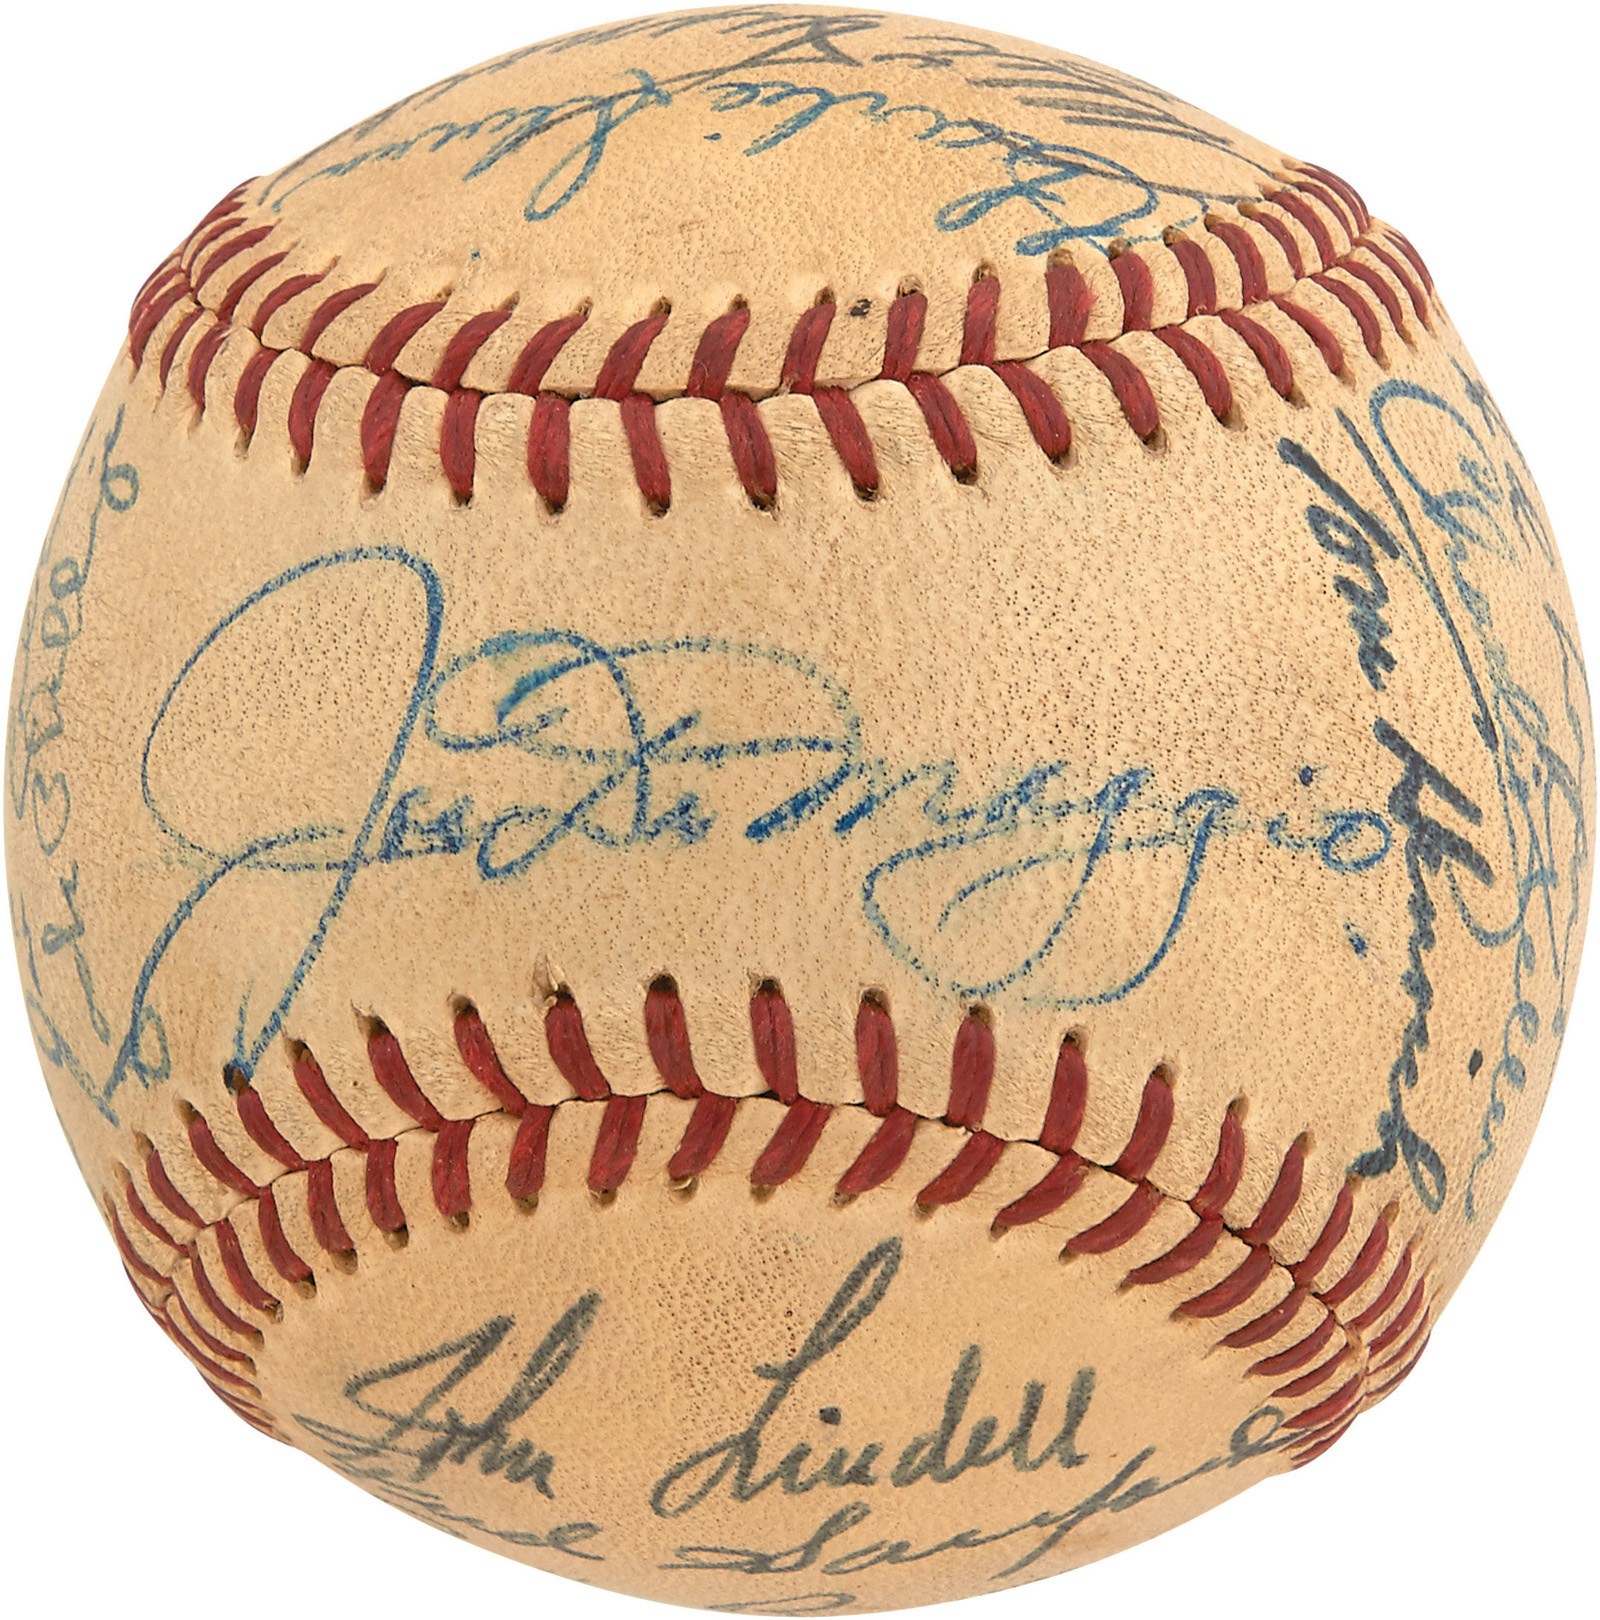 NY Yankees, Giants & Mets - High Grade 1949 World Champion New York Yankees Team-Signed Baseball